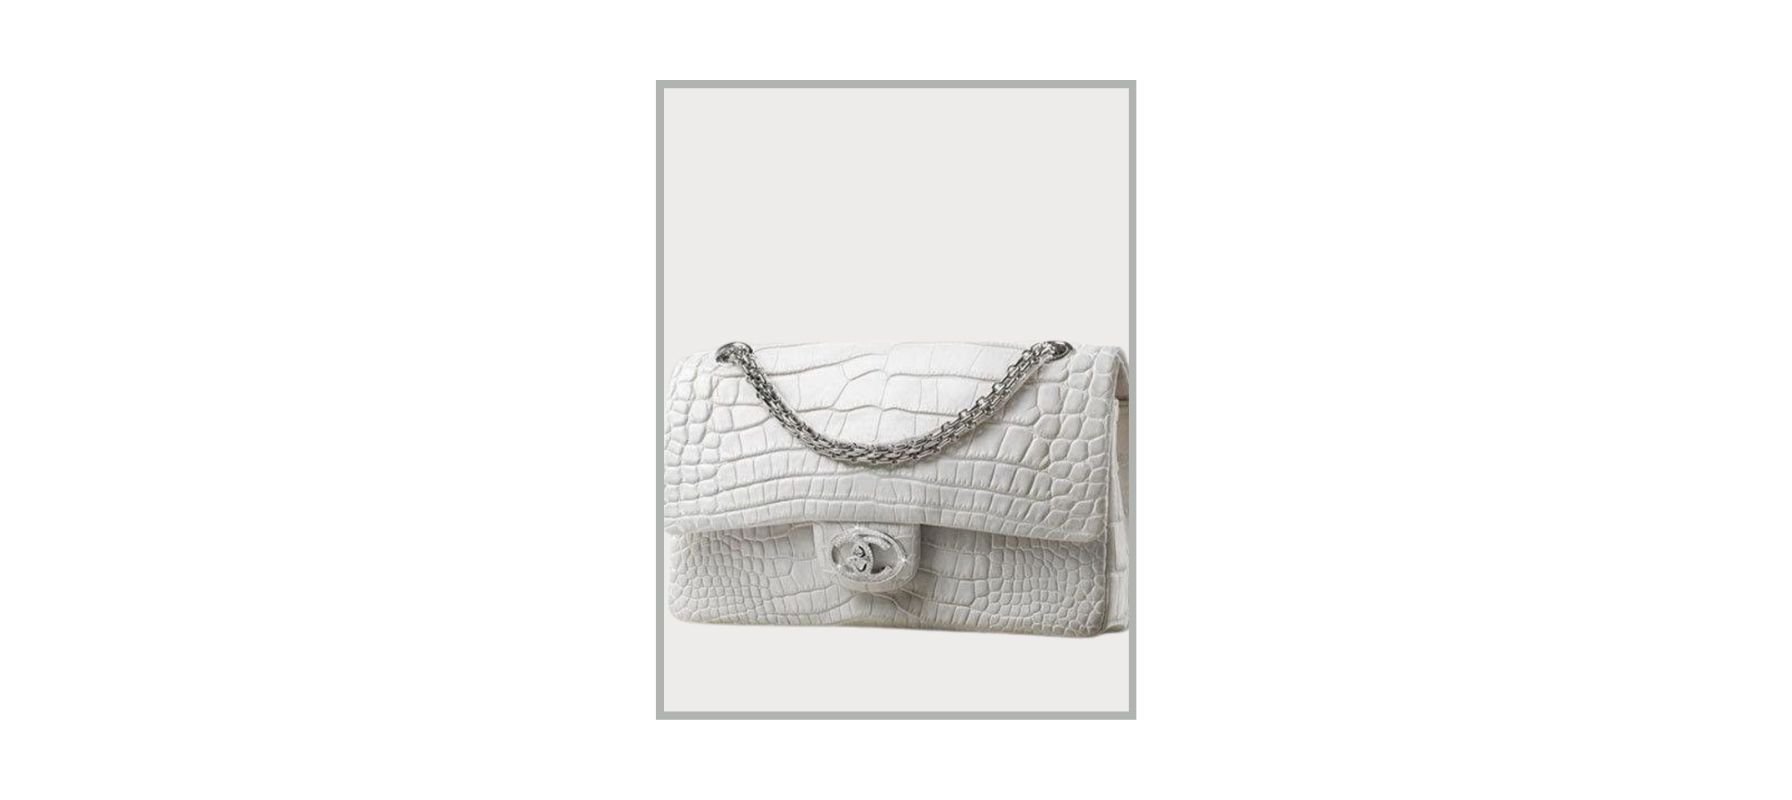 The Best Designer Handbags for Summer 2023 | Vogue